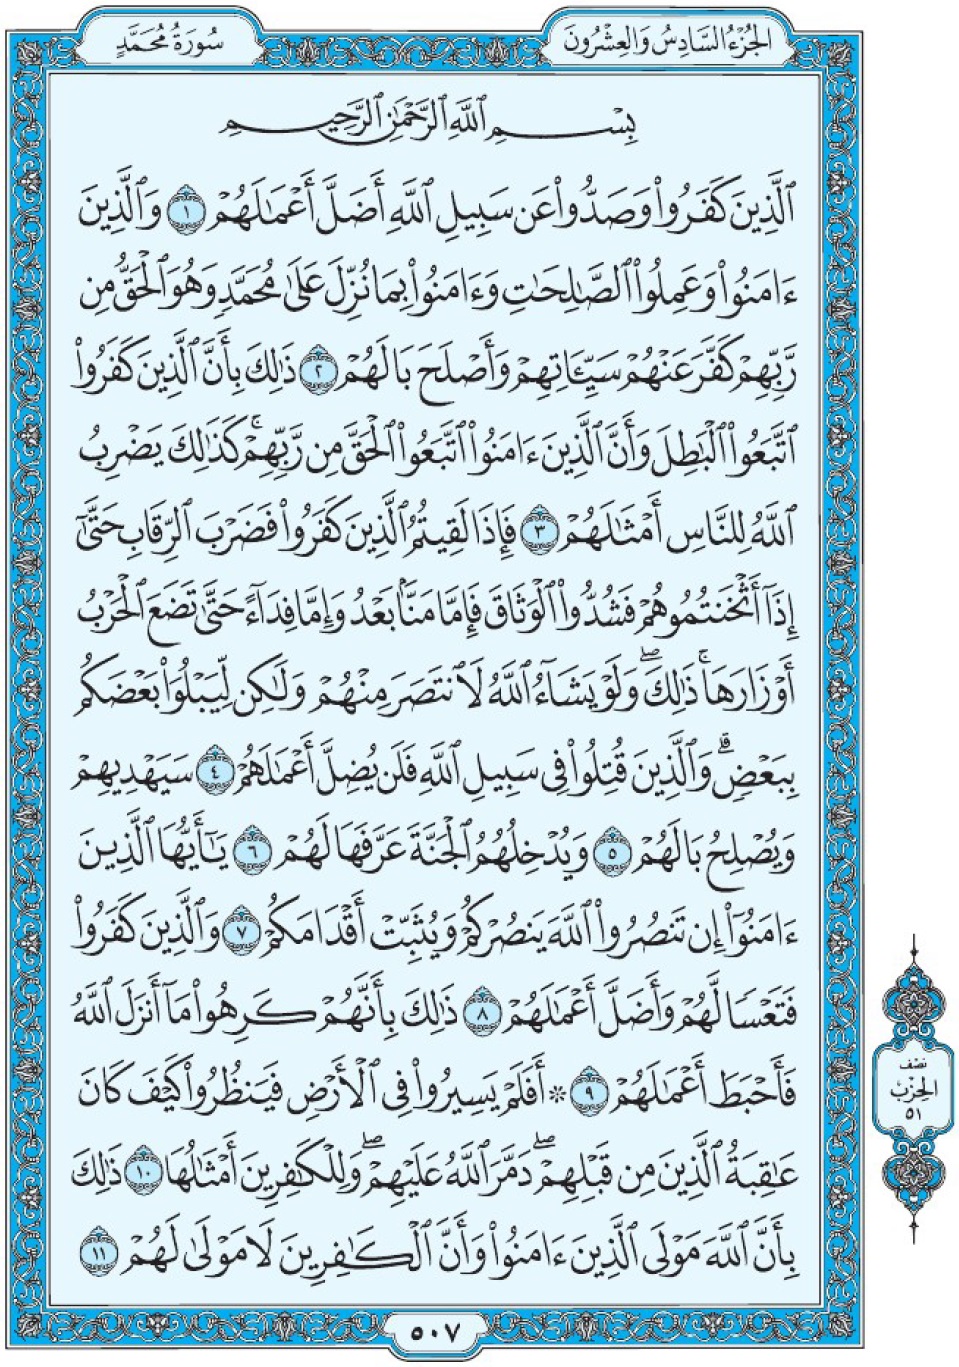 Коран Мединский мусхаф страница 507, сура 47 Мухаммад سورة ٤٧ محمد 